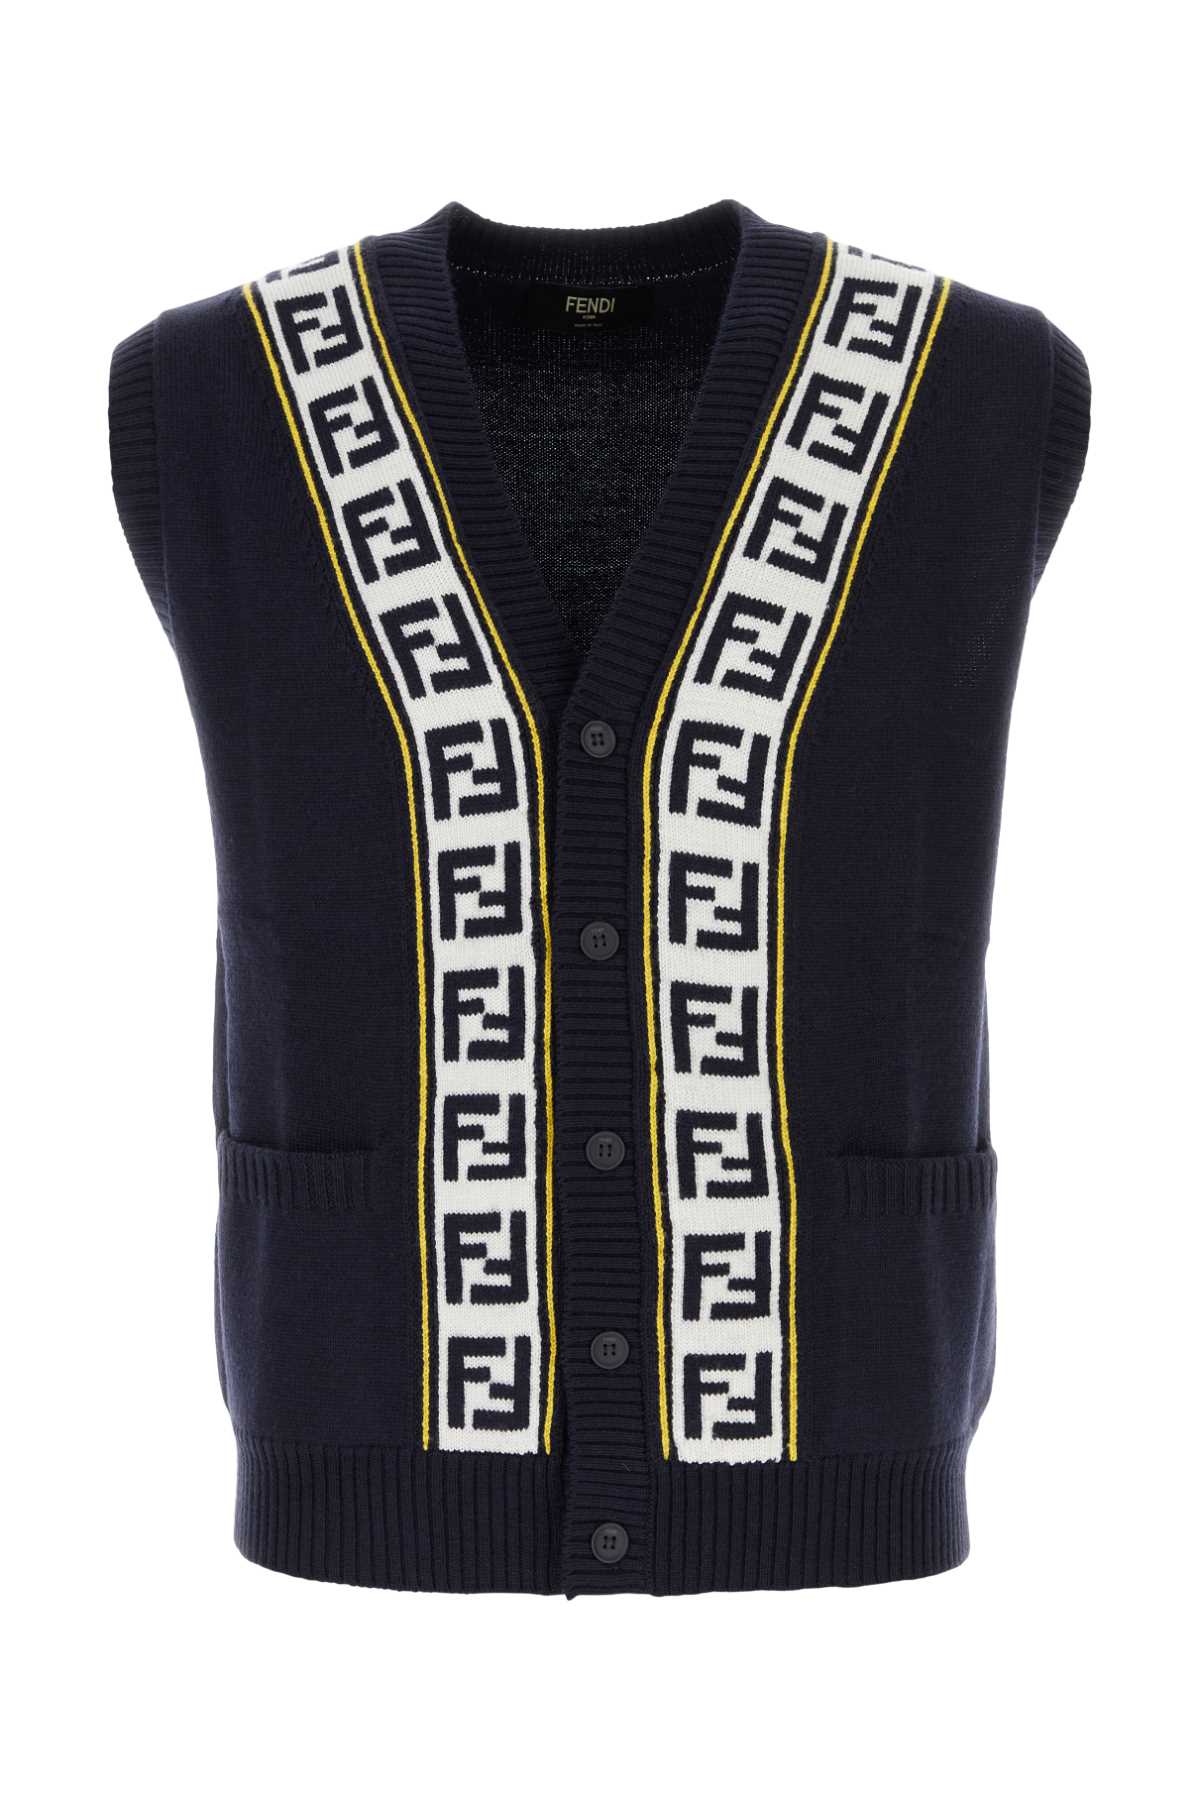 Fendi Navy Blue Wool Vest